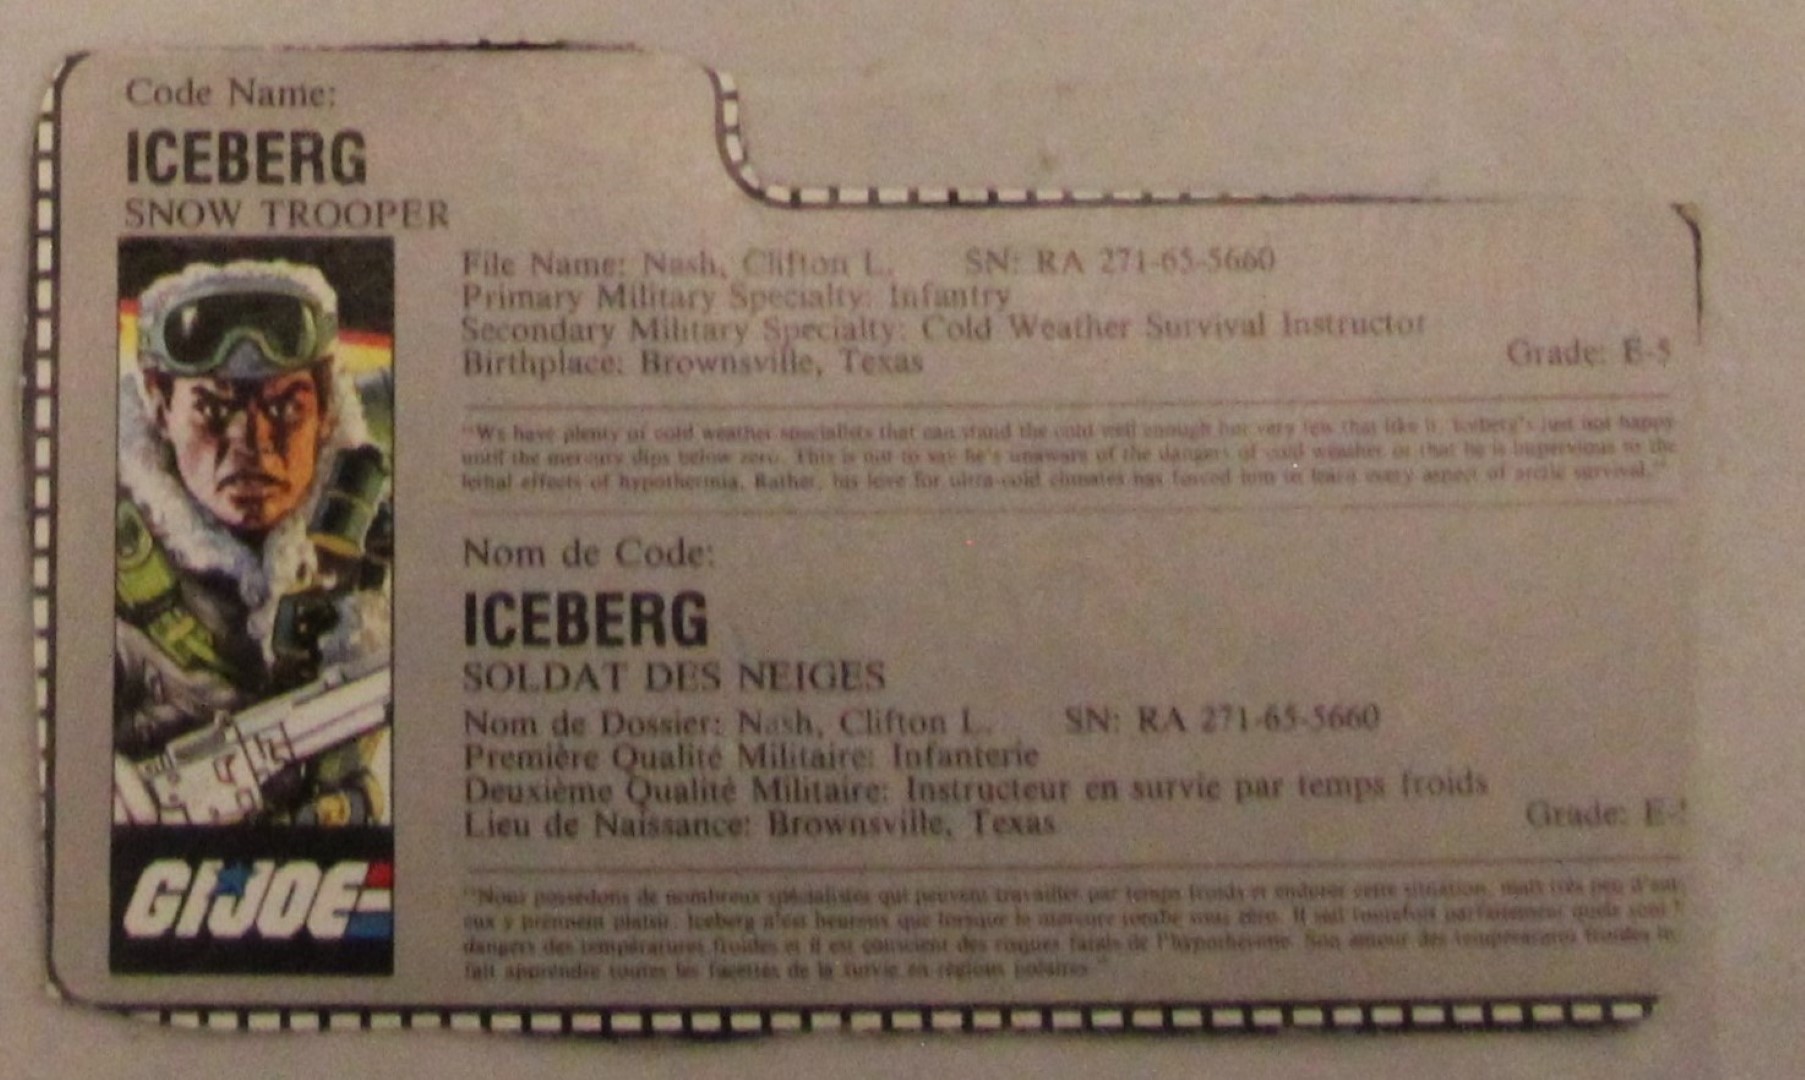 1986 iceberg file card